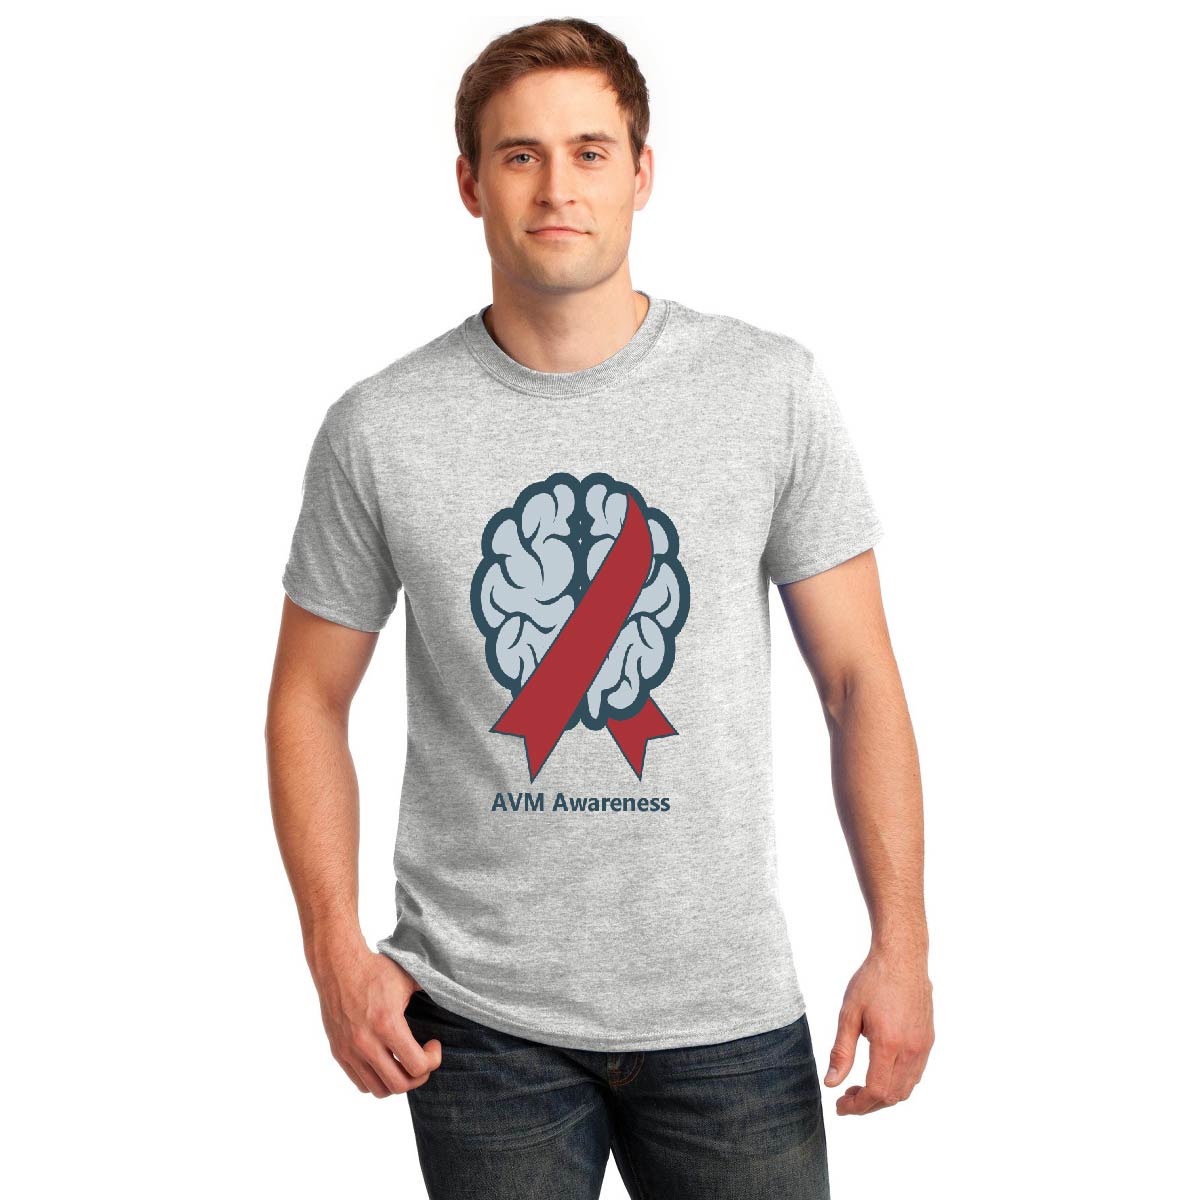 https://www.joeniekrofoundation.com/ways-to-give/apparel/attachment/avm-awareness-shirt-image/